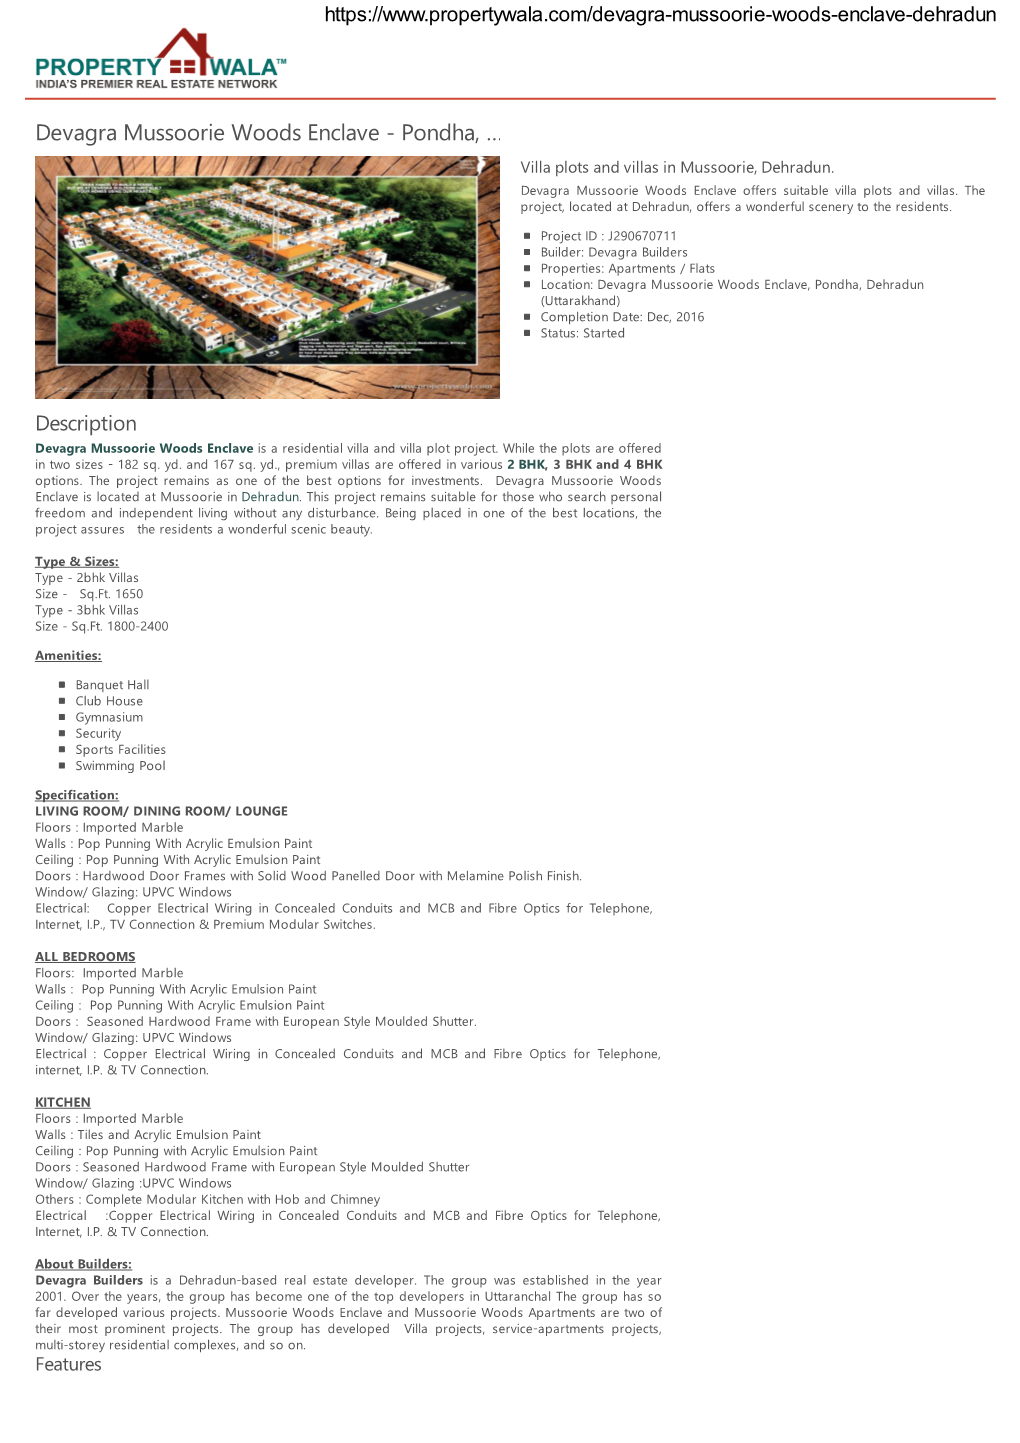 Devagra Mussoorie Woods Enclave - Pondha, … Villa Plots and Villas in Mussoorie, Dehradun